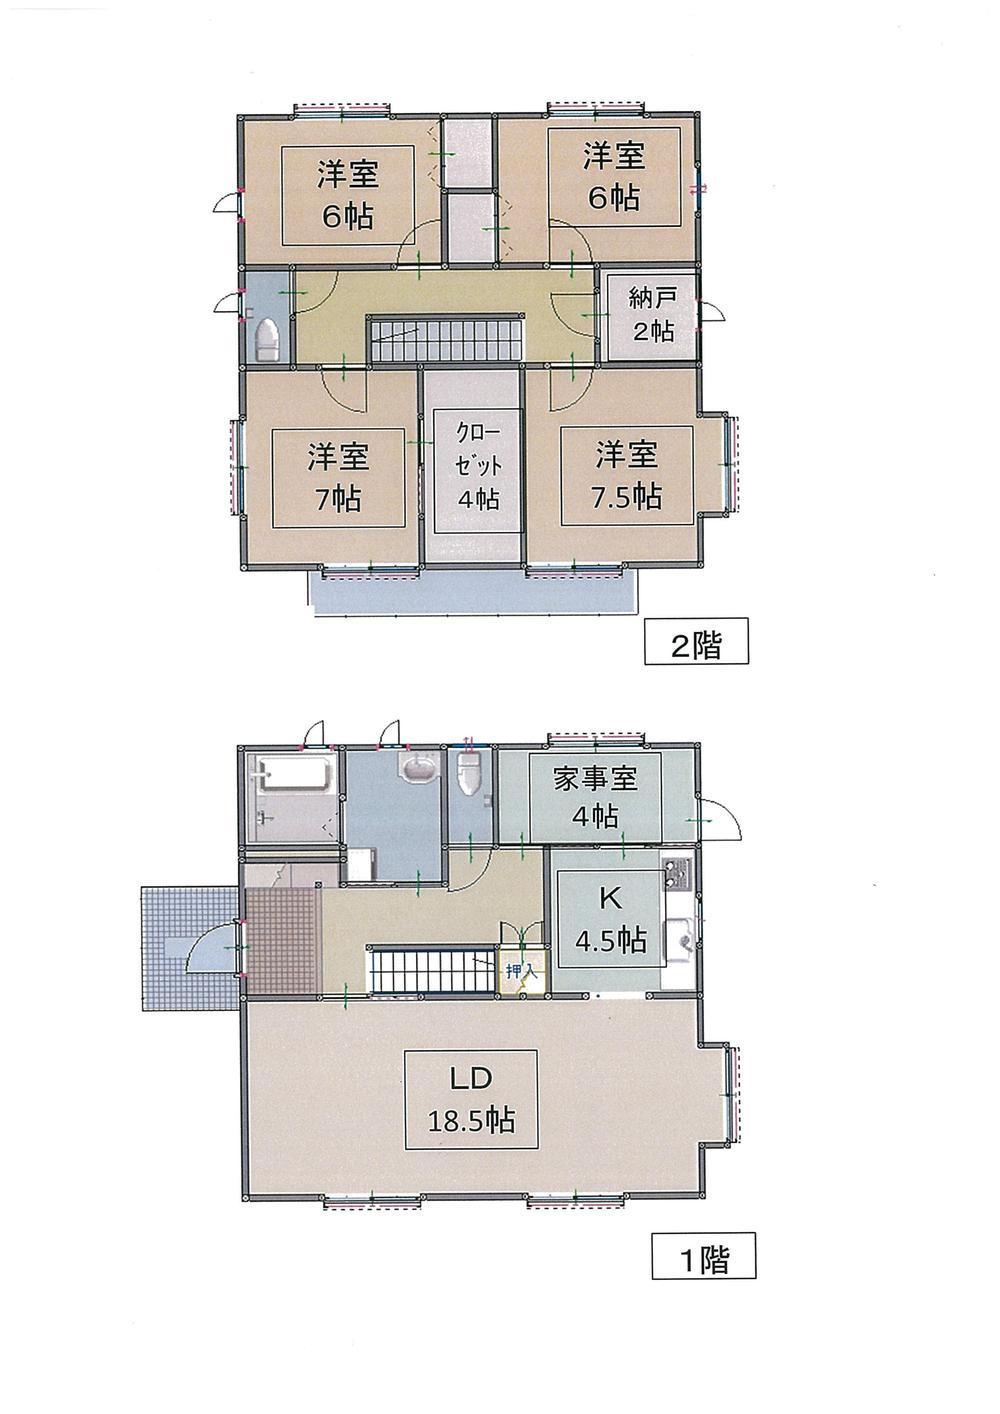 Floor plan. 19,800,000 yen, 4LDK + S (storeroom), Land area 199.67 sq m , Building area 135.82 sq m spacious LDK, Utility room, Walk-in closet, It is 4LDK with a closet. 